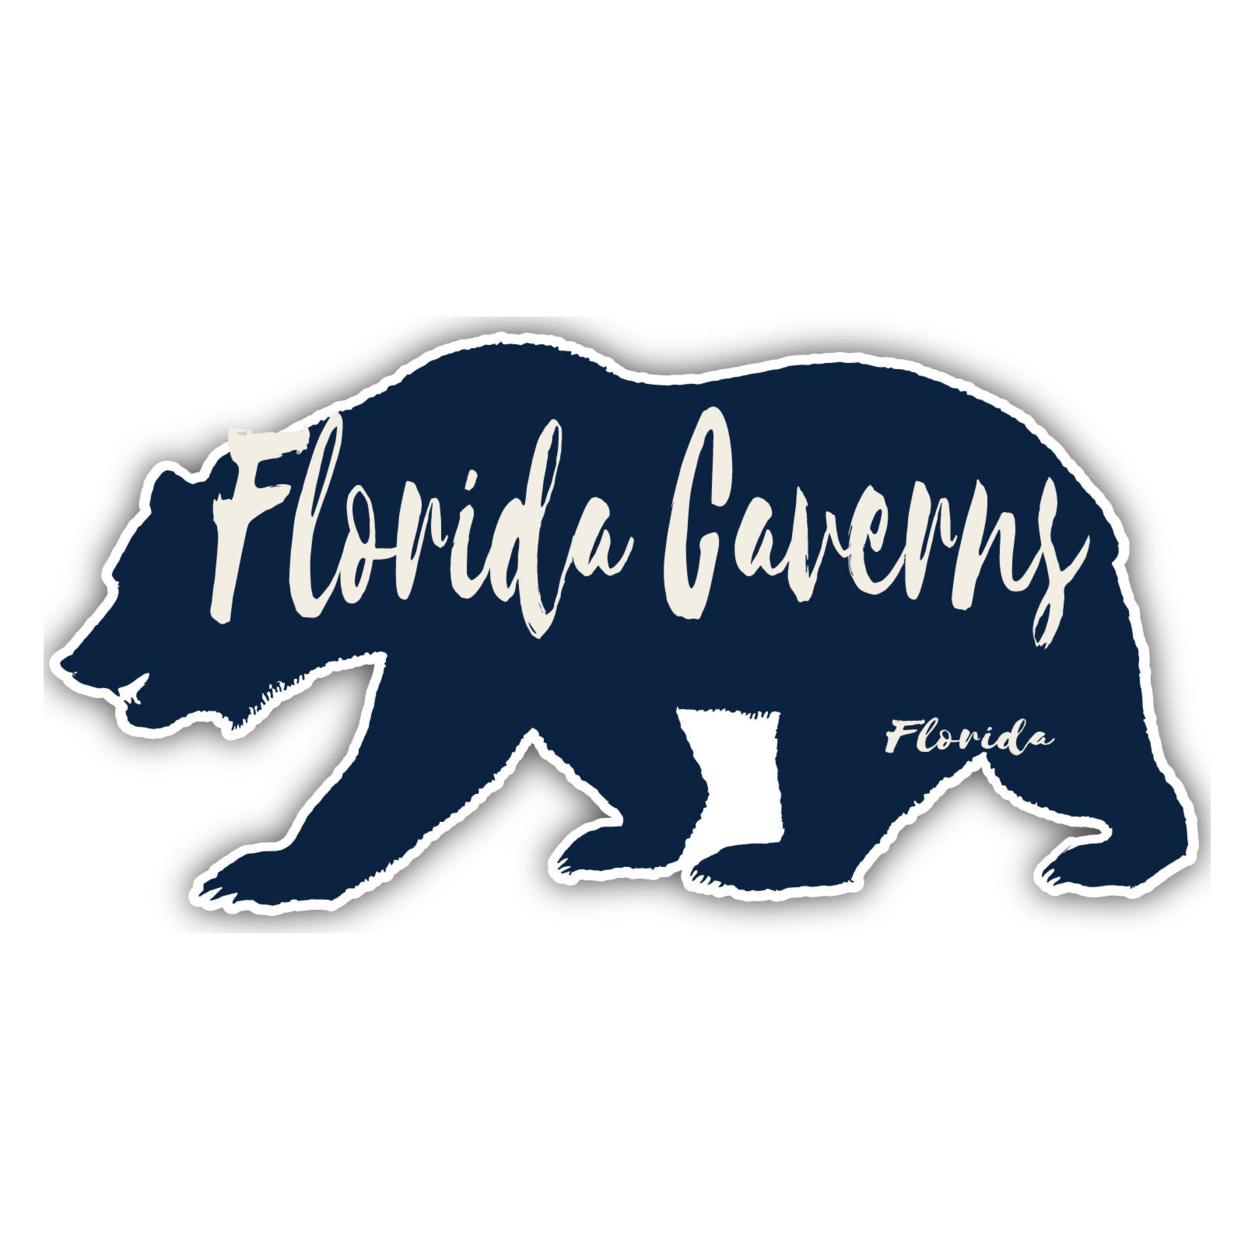 Florida Caverns Florida Souvenir Decorative Stickers (Choose Theme And Size) - 4-Pack, 10-Inch, Bear